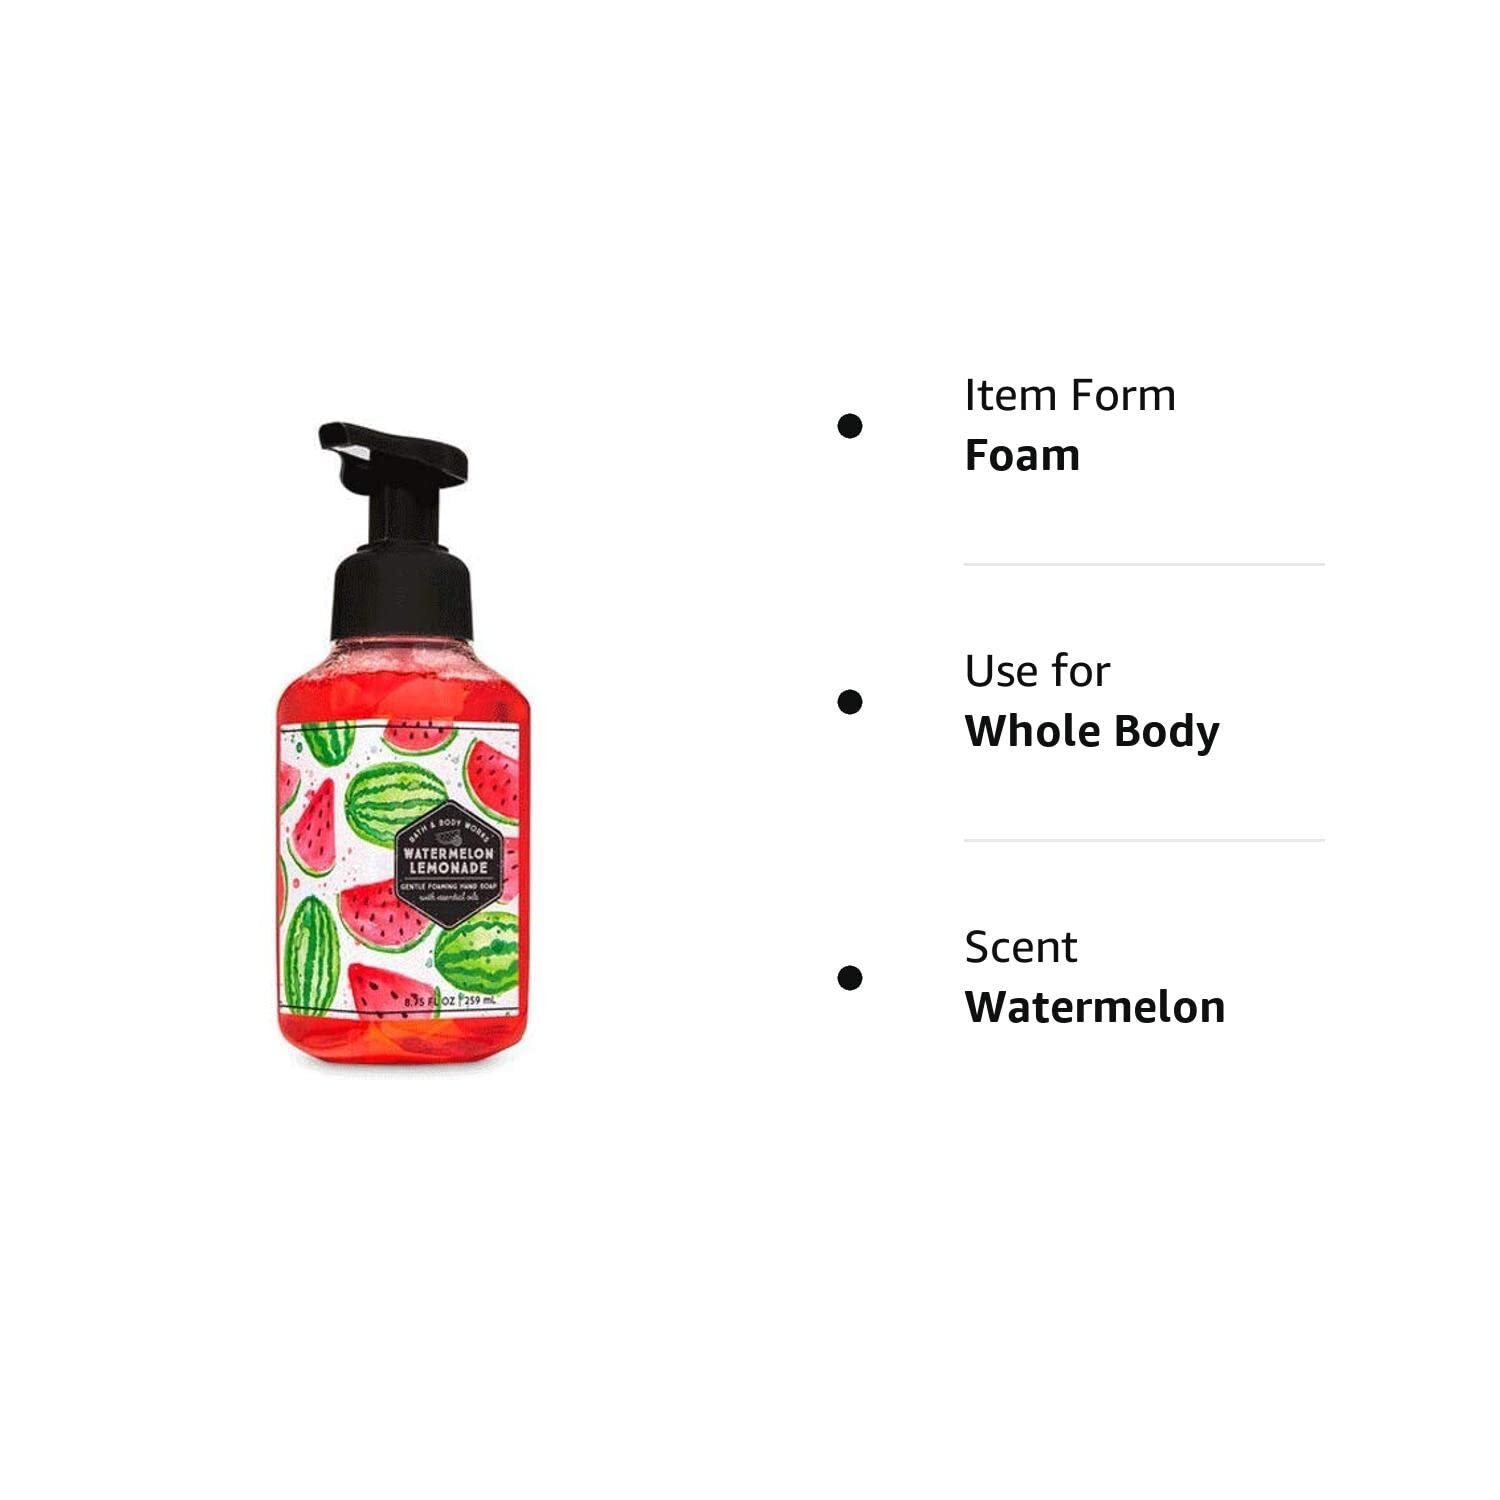 White Barn by Bath & Body Works Gentle Foaming Hand Soap in Mahogany Teakwood (2 Pack)